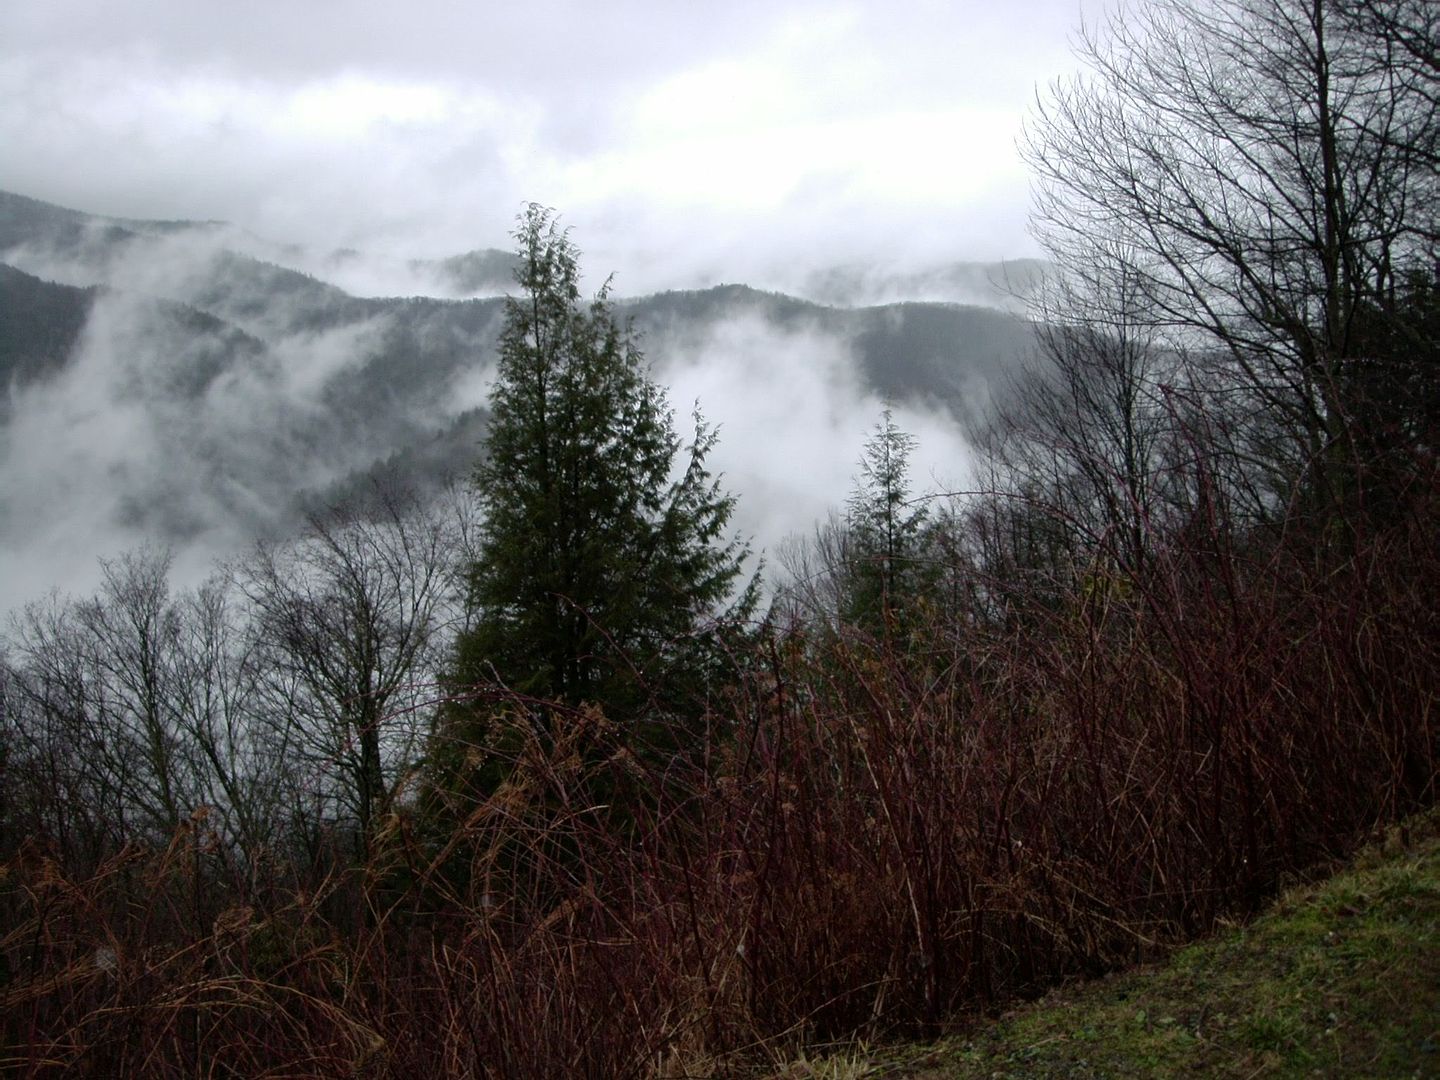 DSC00396.jpg Tennessee Smokey Mountains image by RaferWiggins